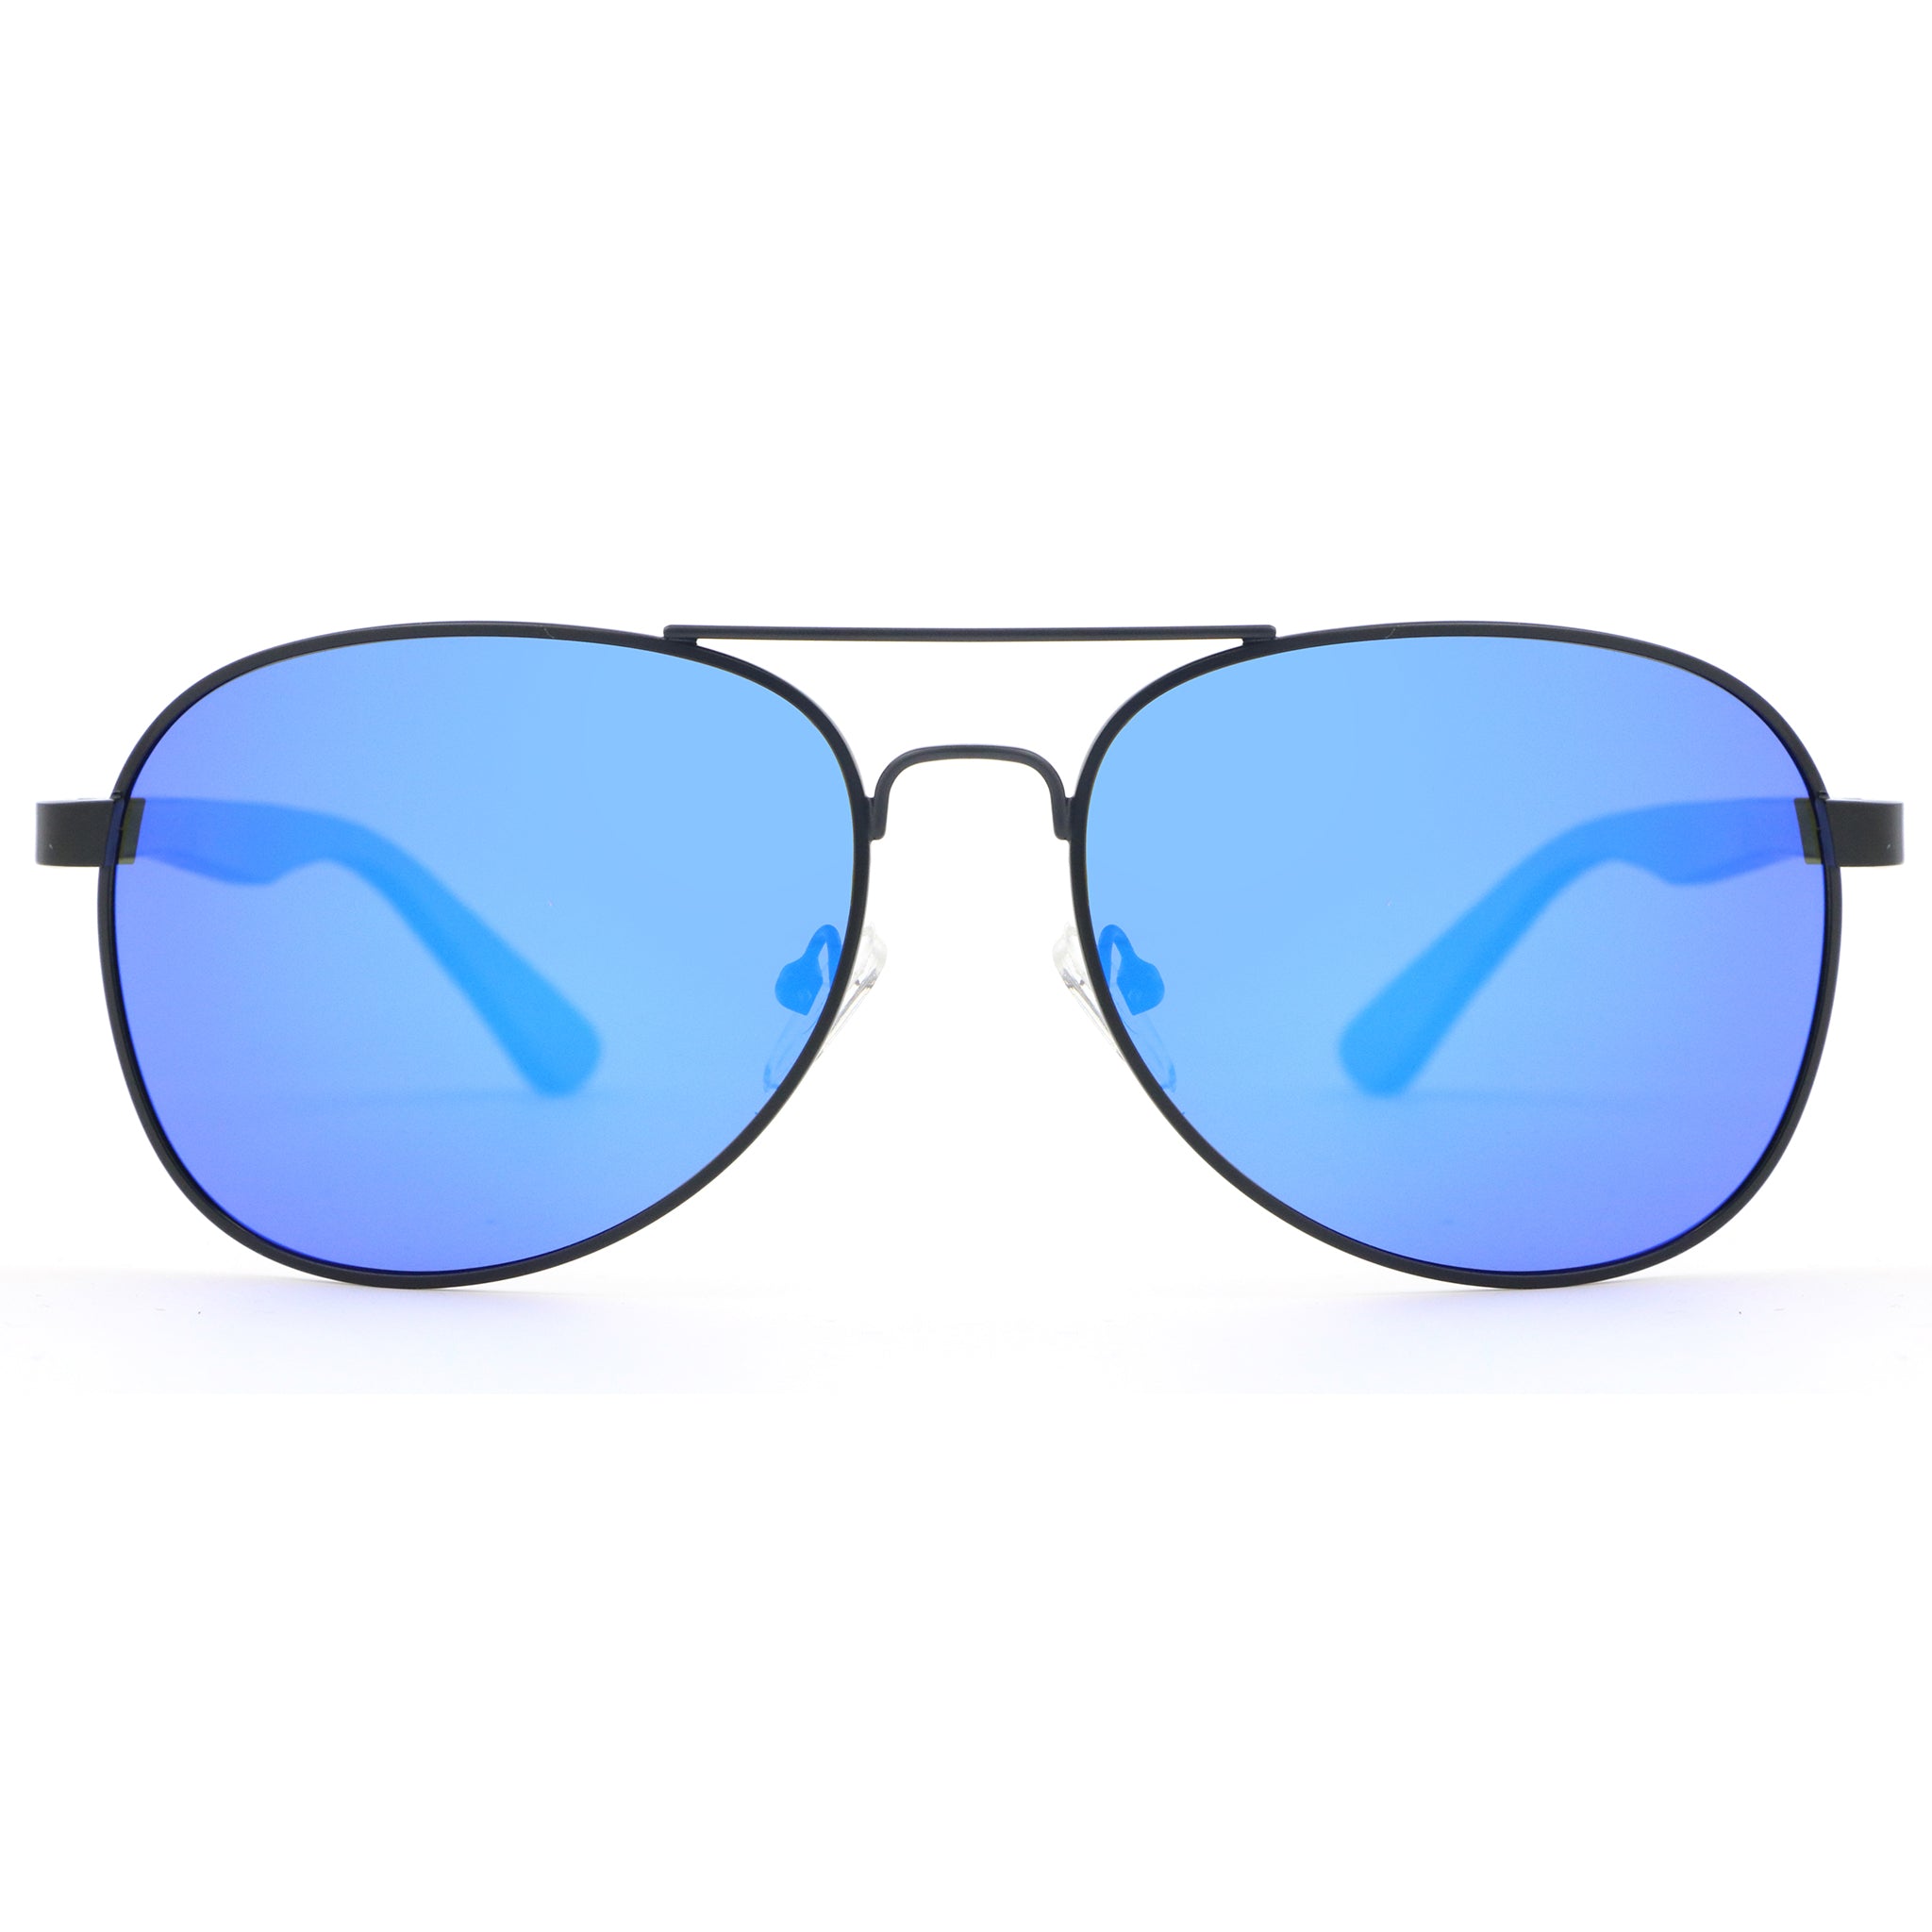 Aviator Wooden Sunglasses